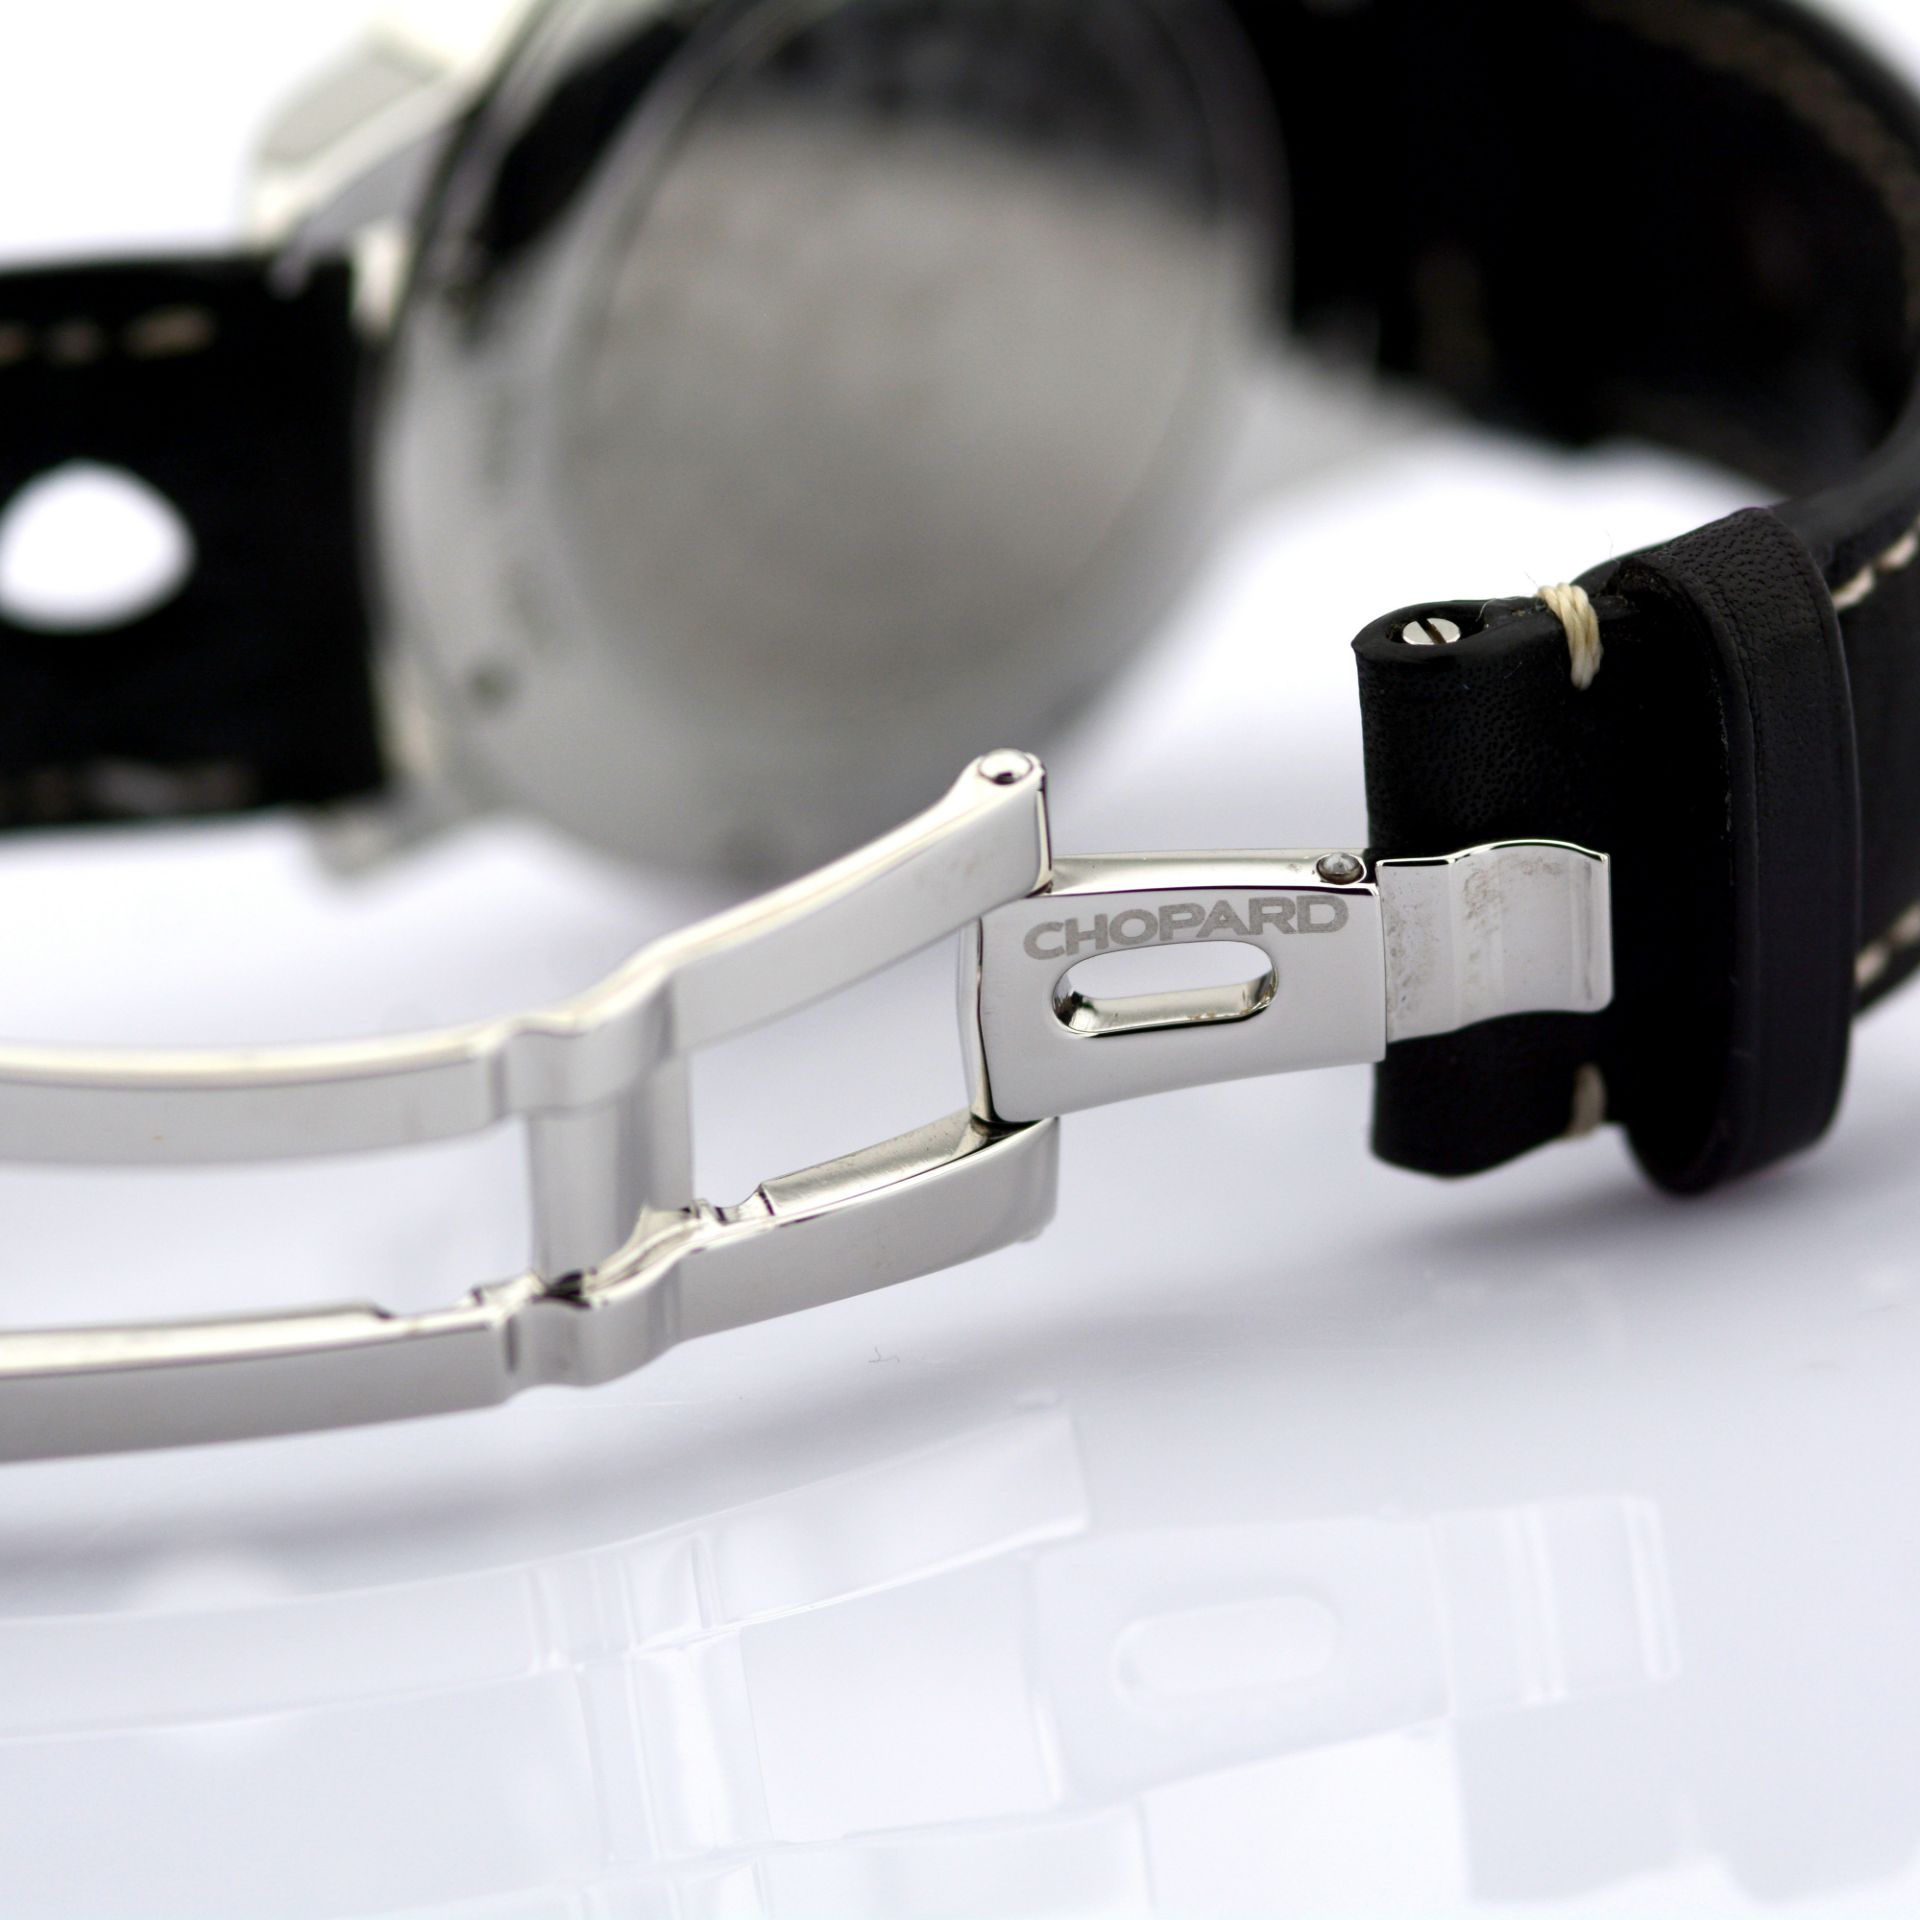 Chopard / 1000 Miglia Grand Turismo Prototype - Gentlmen's Steel Wrist Watch - Image 6 of 8